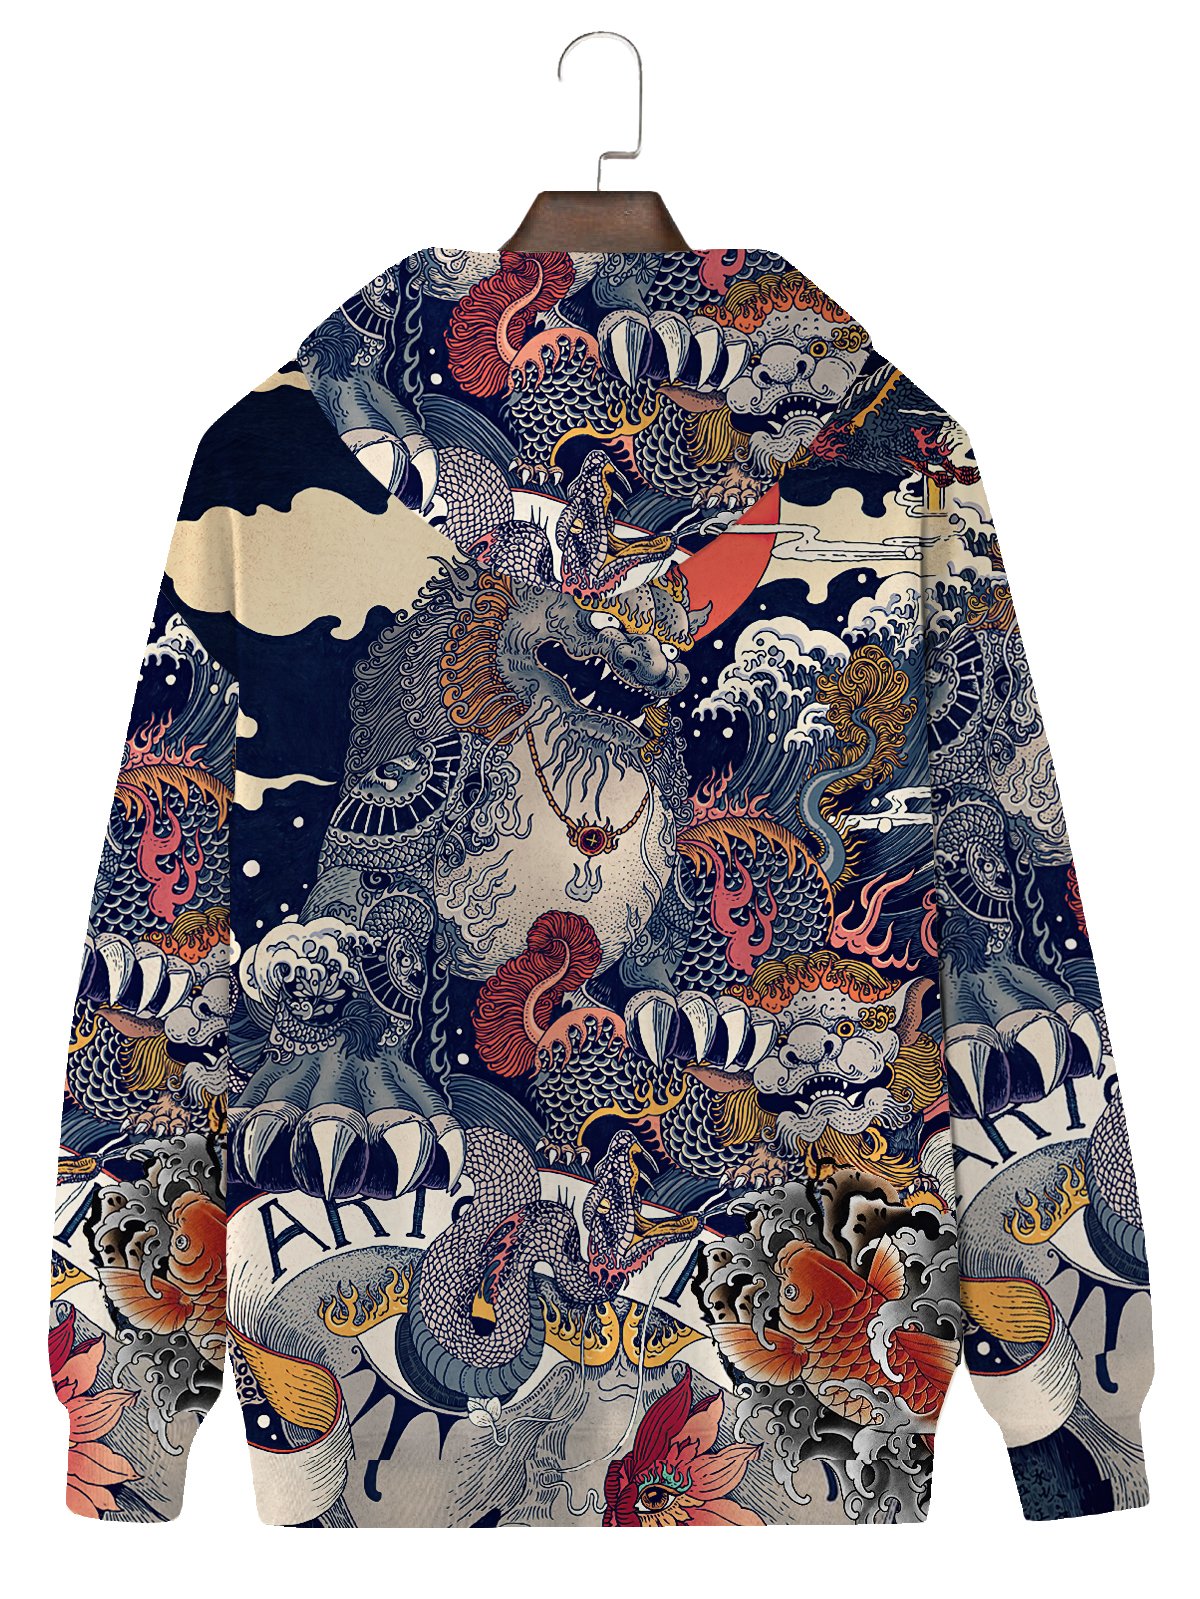  Men's Vintage Hoodies Japanese Ukiyo-e Art Cotton Blend Plus Size Sweatshirts